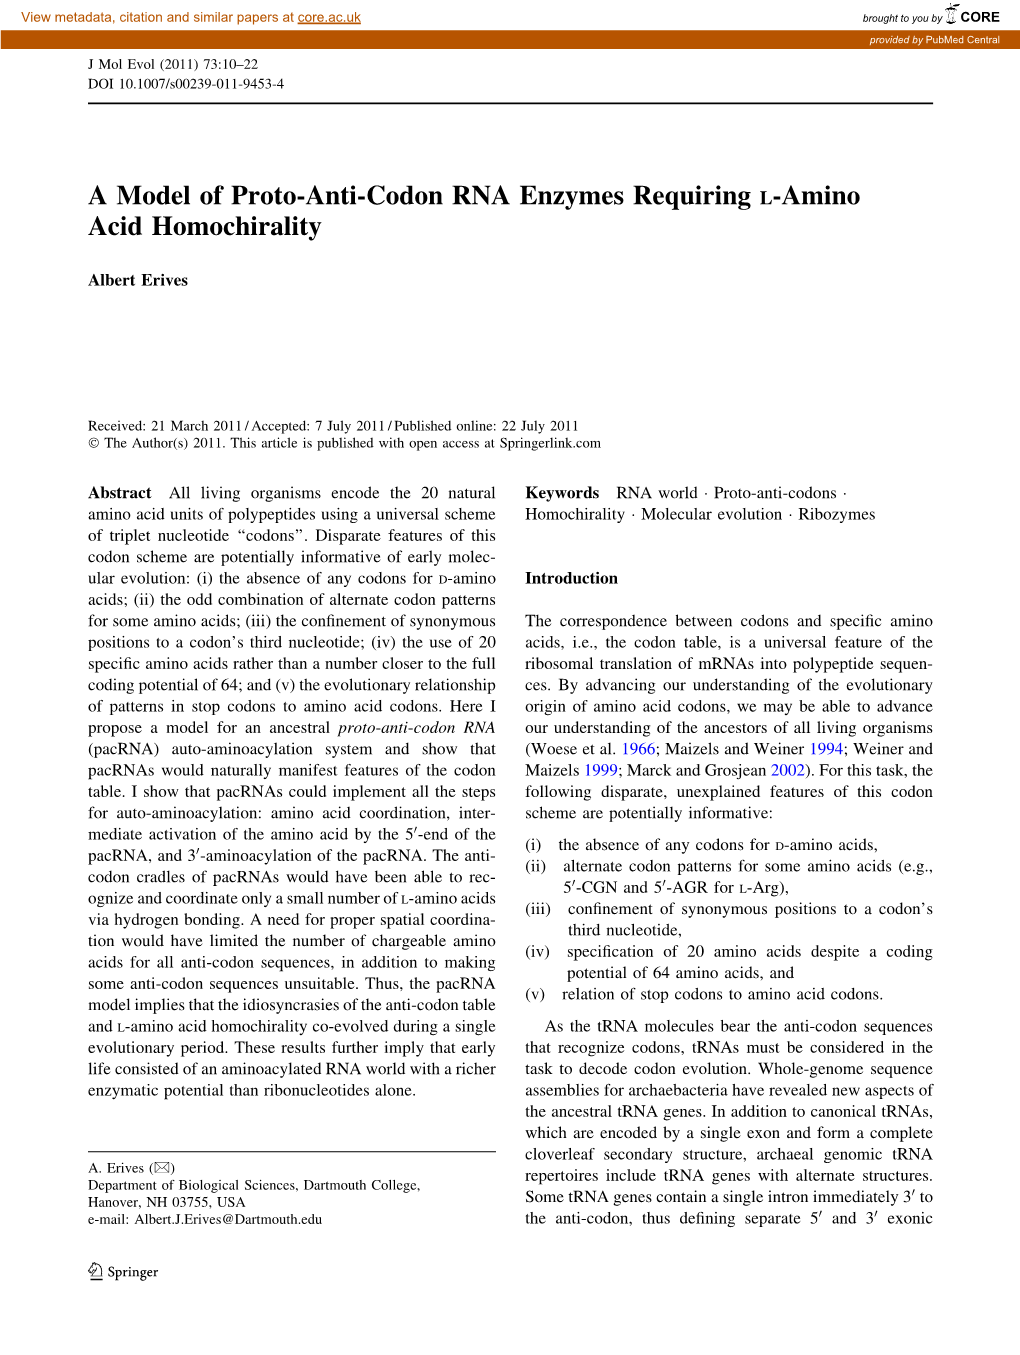 A Model of Proto-Anti-Codon RNA Enzymes Requiring L-Amino Acid Homochirality